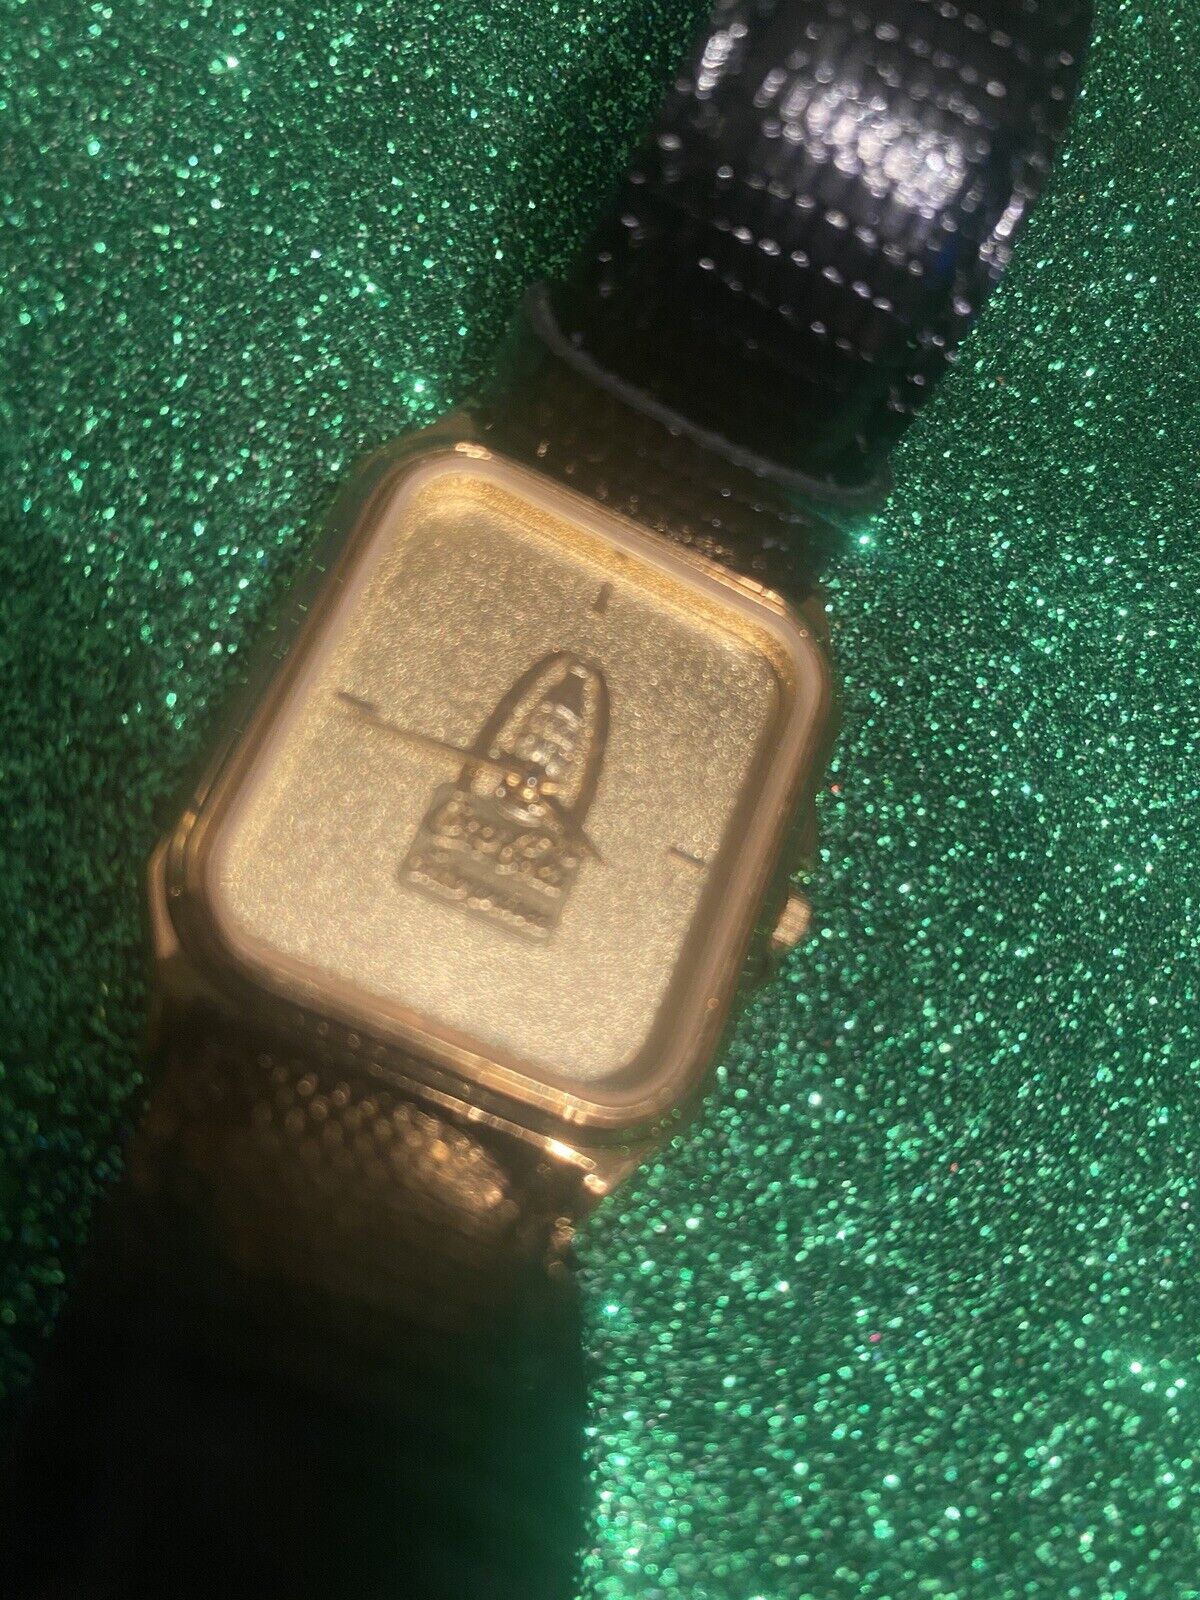 VIntage Jostens Carriage Gold Coca Cola wrist watch  Works